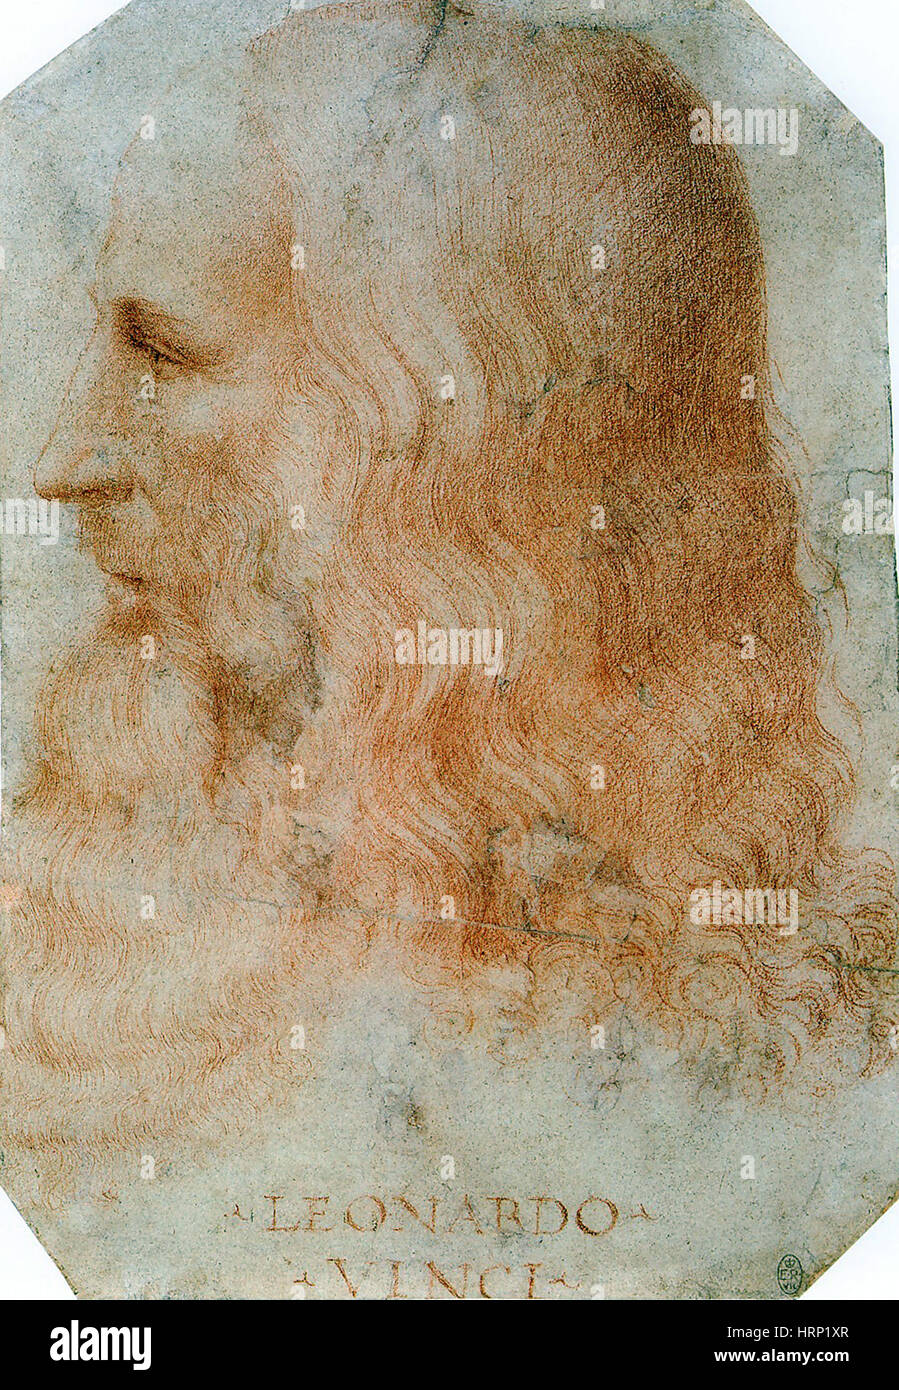 Leonardo da Vinci, Italian Renaissance Polymath Stock Photo